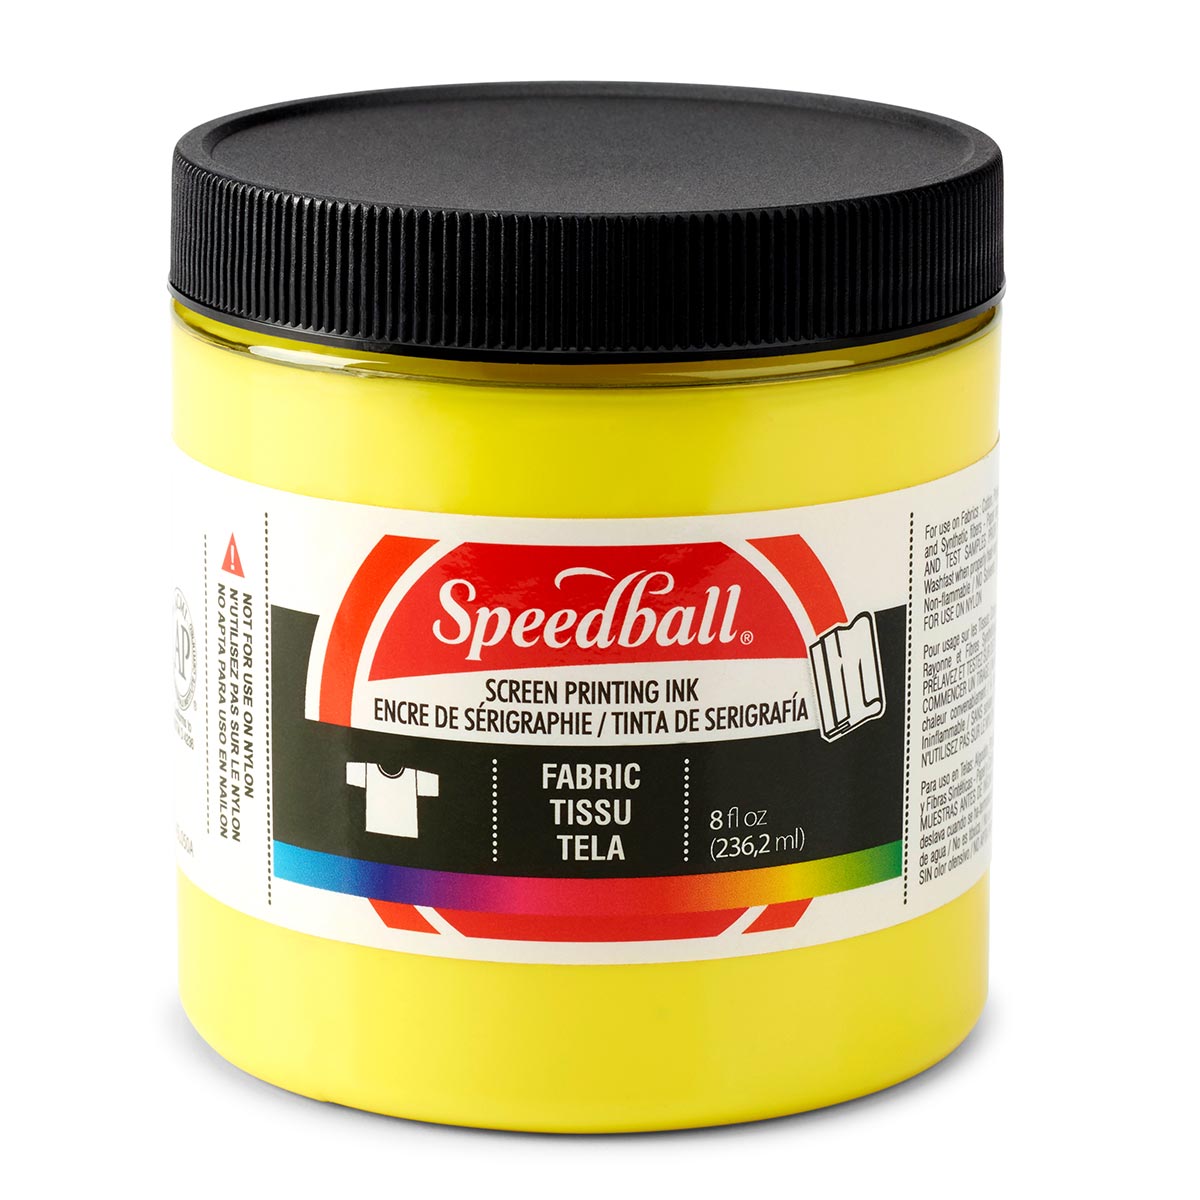 Speedball - Fabric Screen Printing Ink 236ml (8oz) - Process Yellow